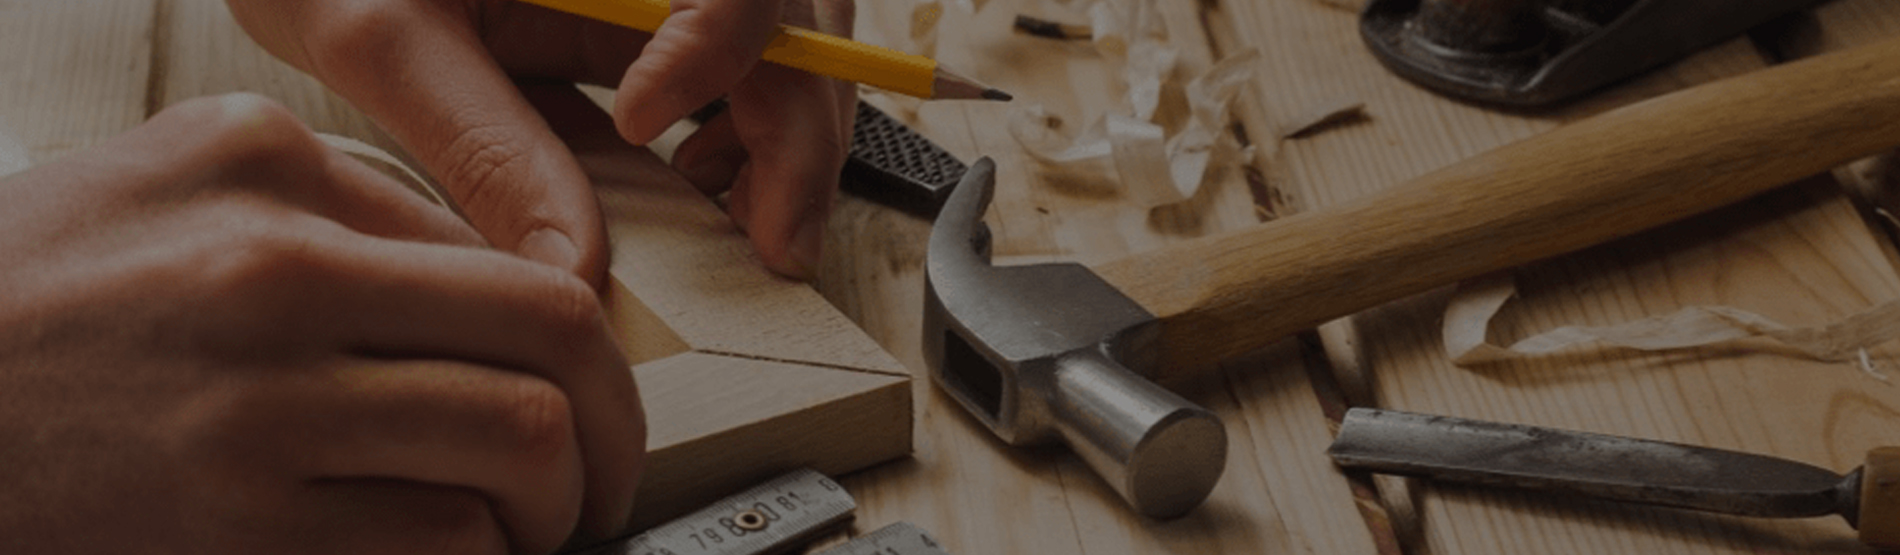 8 Smart Carpentry Ideas to Make Your Home Seem Bigger